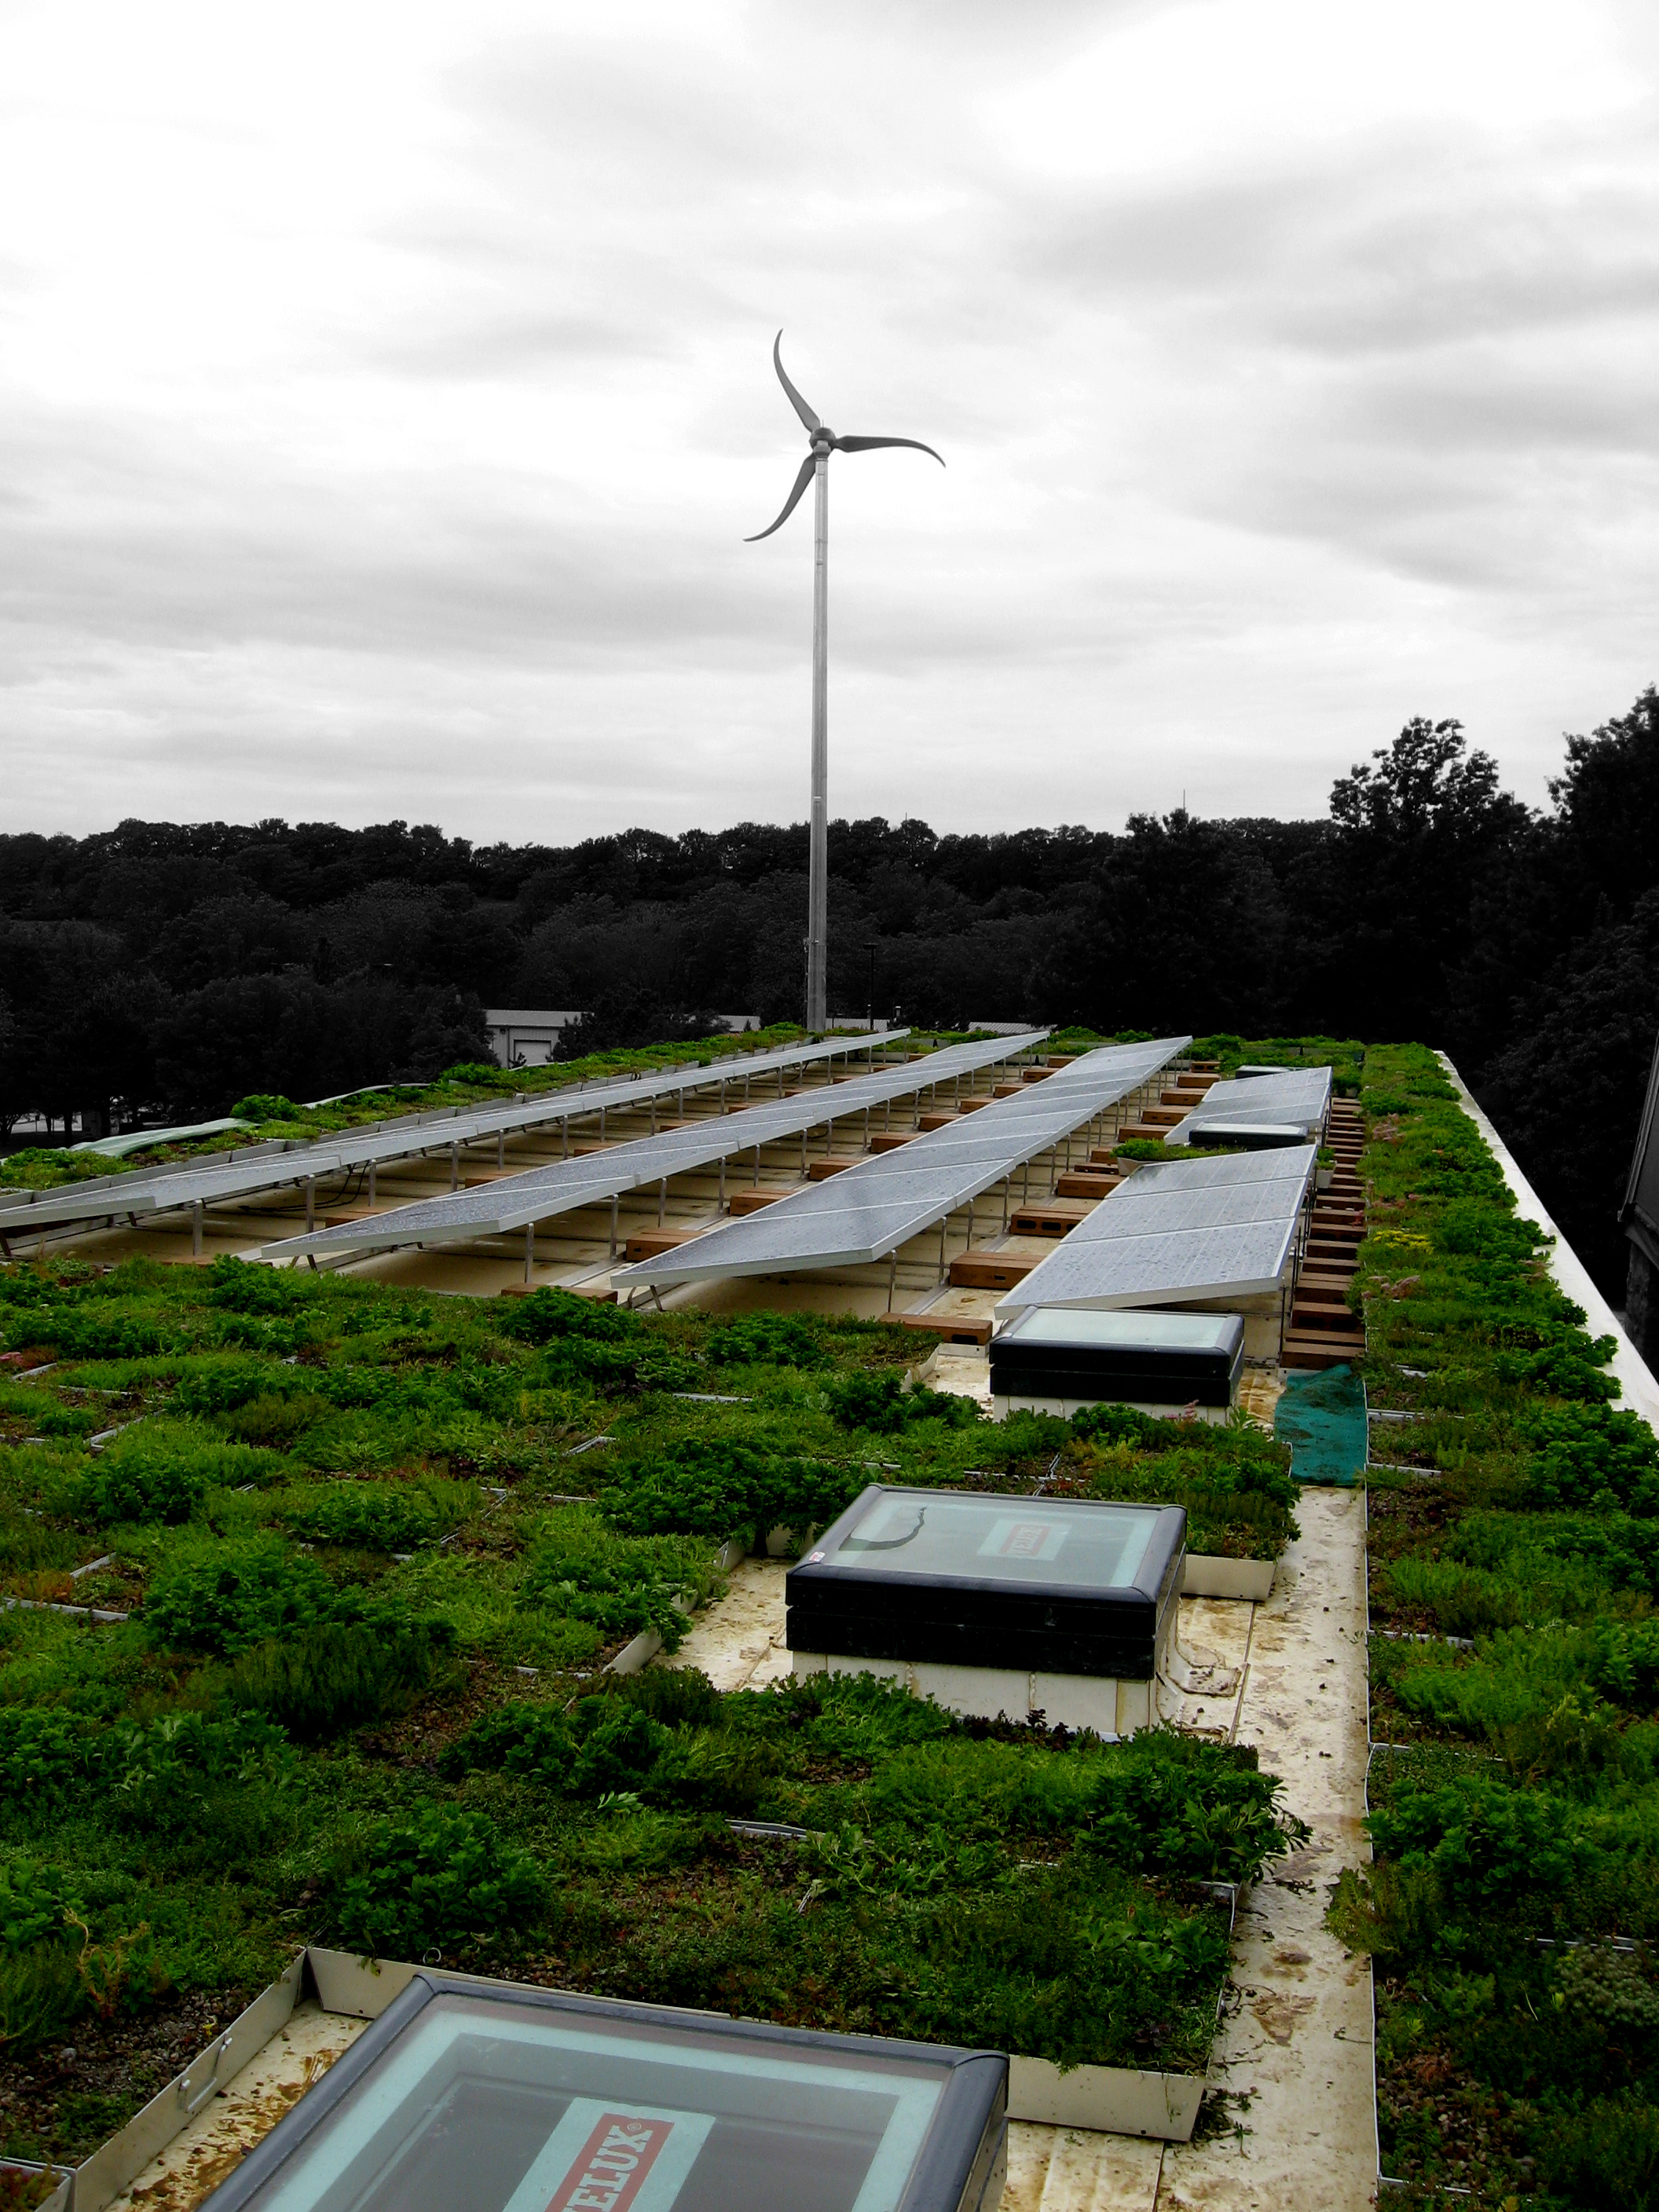 099_DOCU_PHOTO_20110518_Green Roof Blocks, PV Solar Panels, & Wind Turbine ed2.jpg